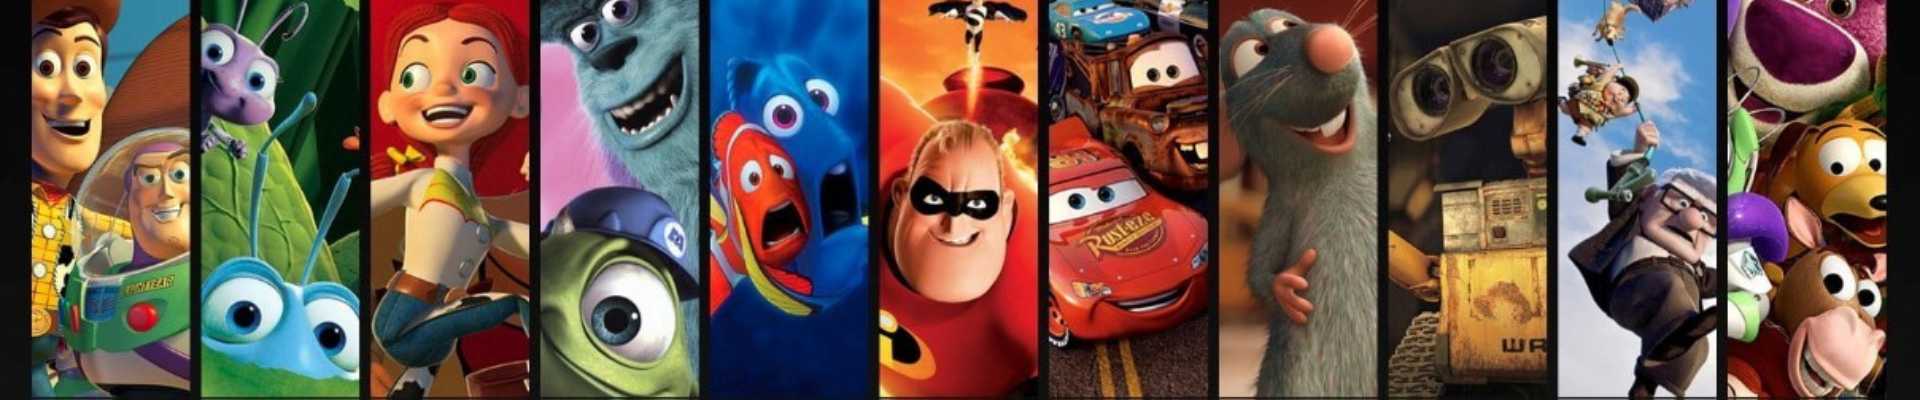 Disney Pixar Quizzes and trivia